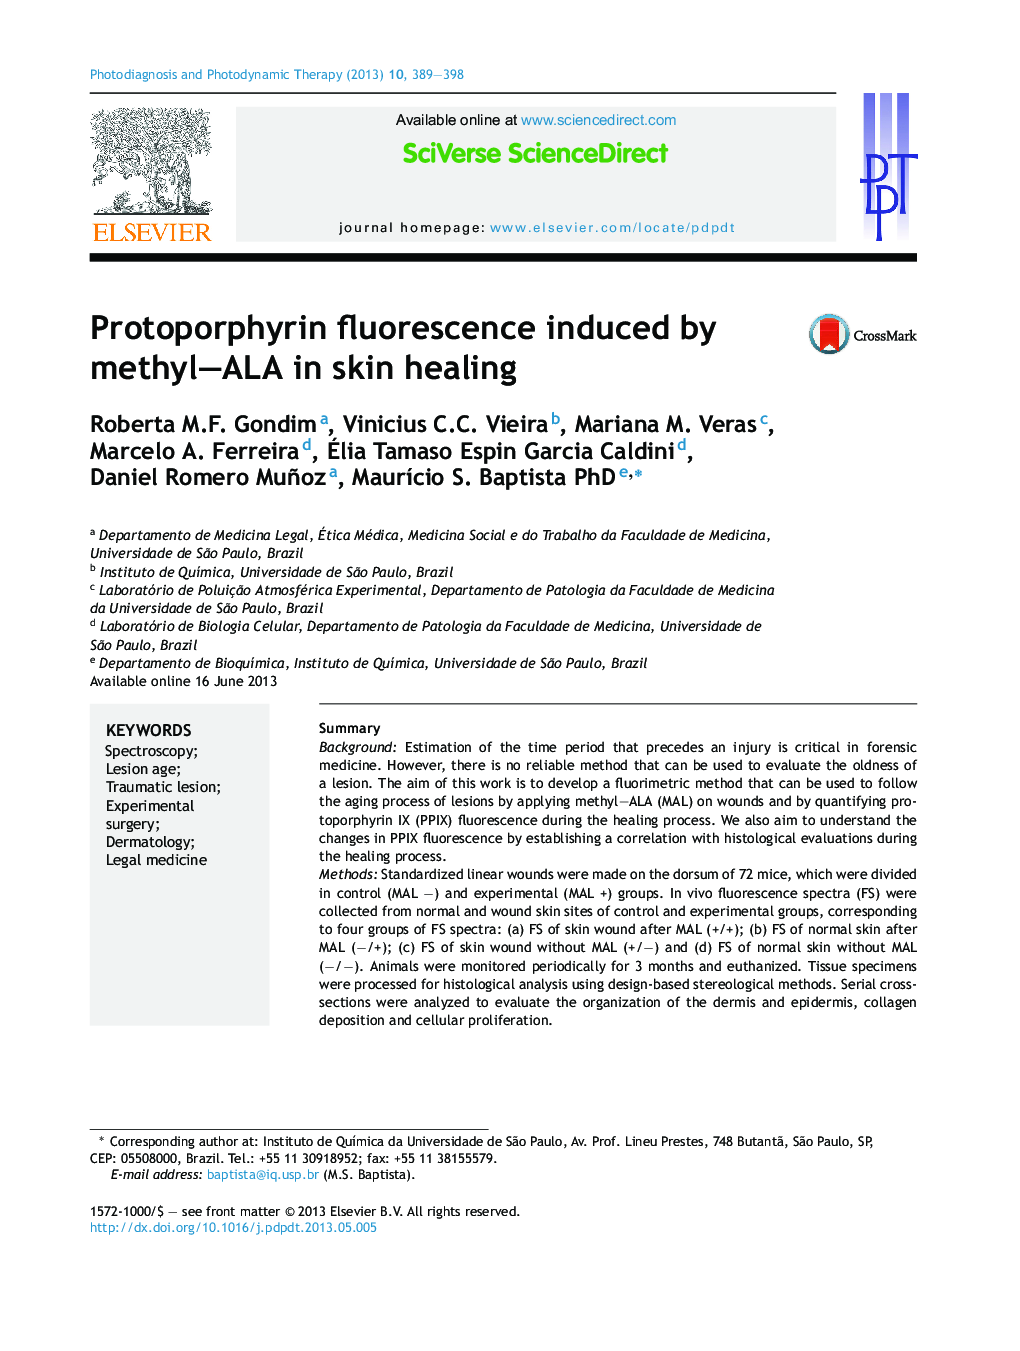 Protoporphyrin fluorescence induced by methyl–ALA in skin healing